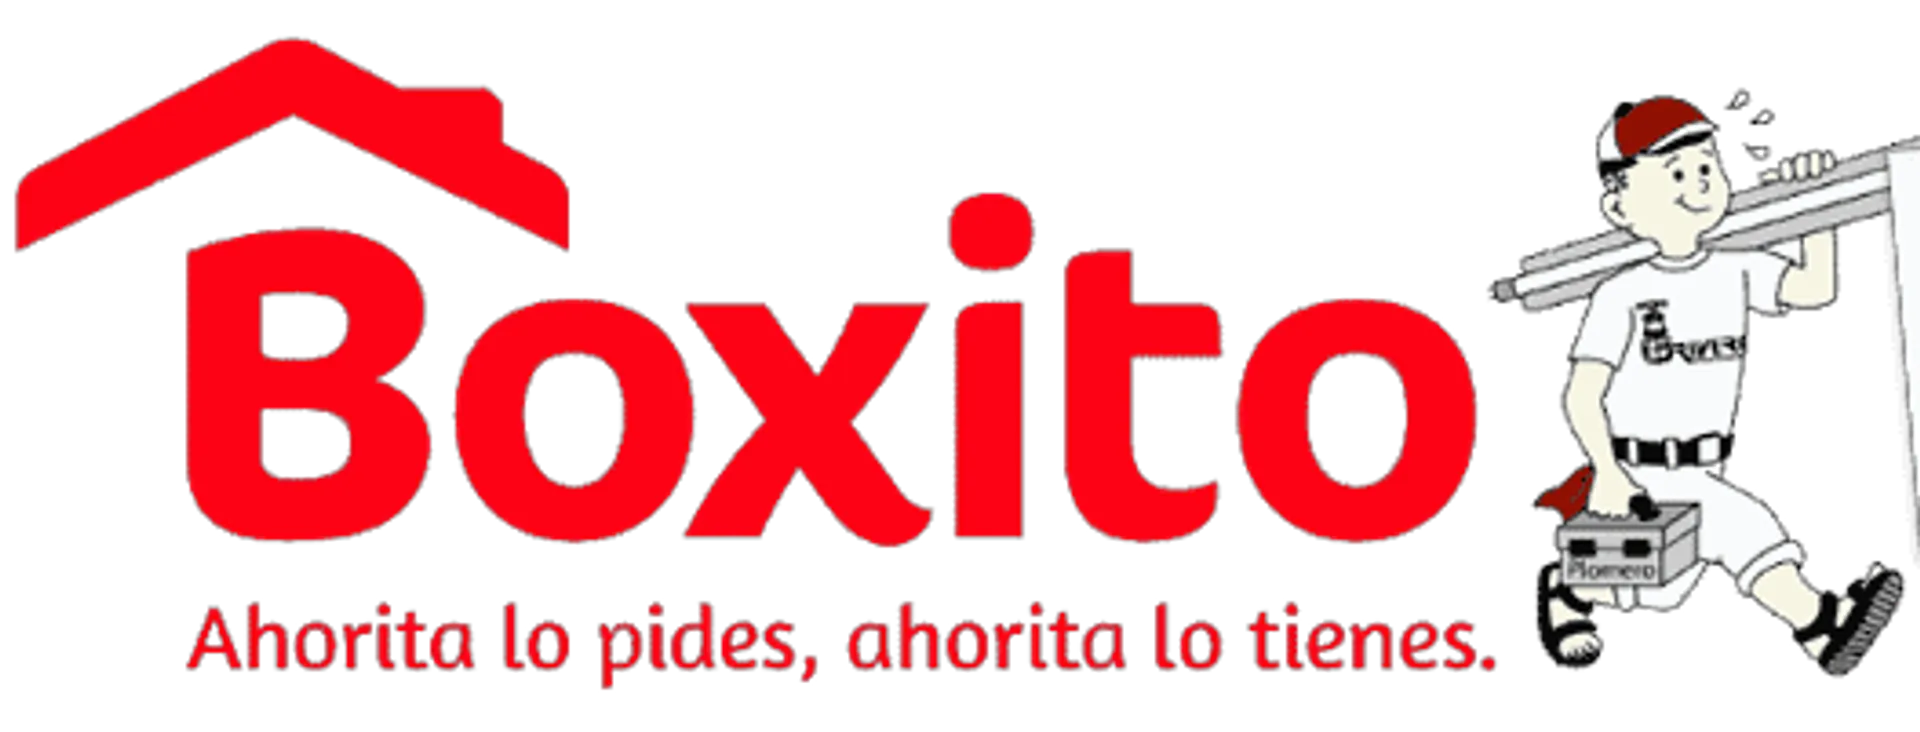 BOXITO logo